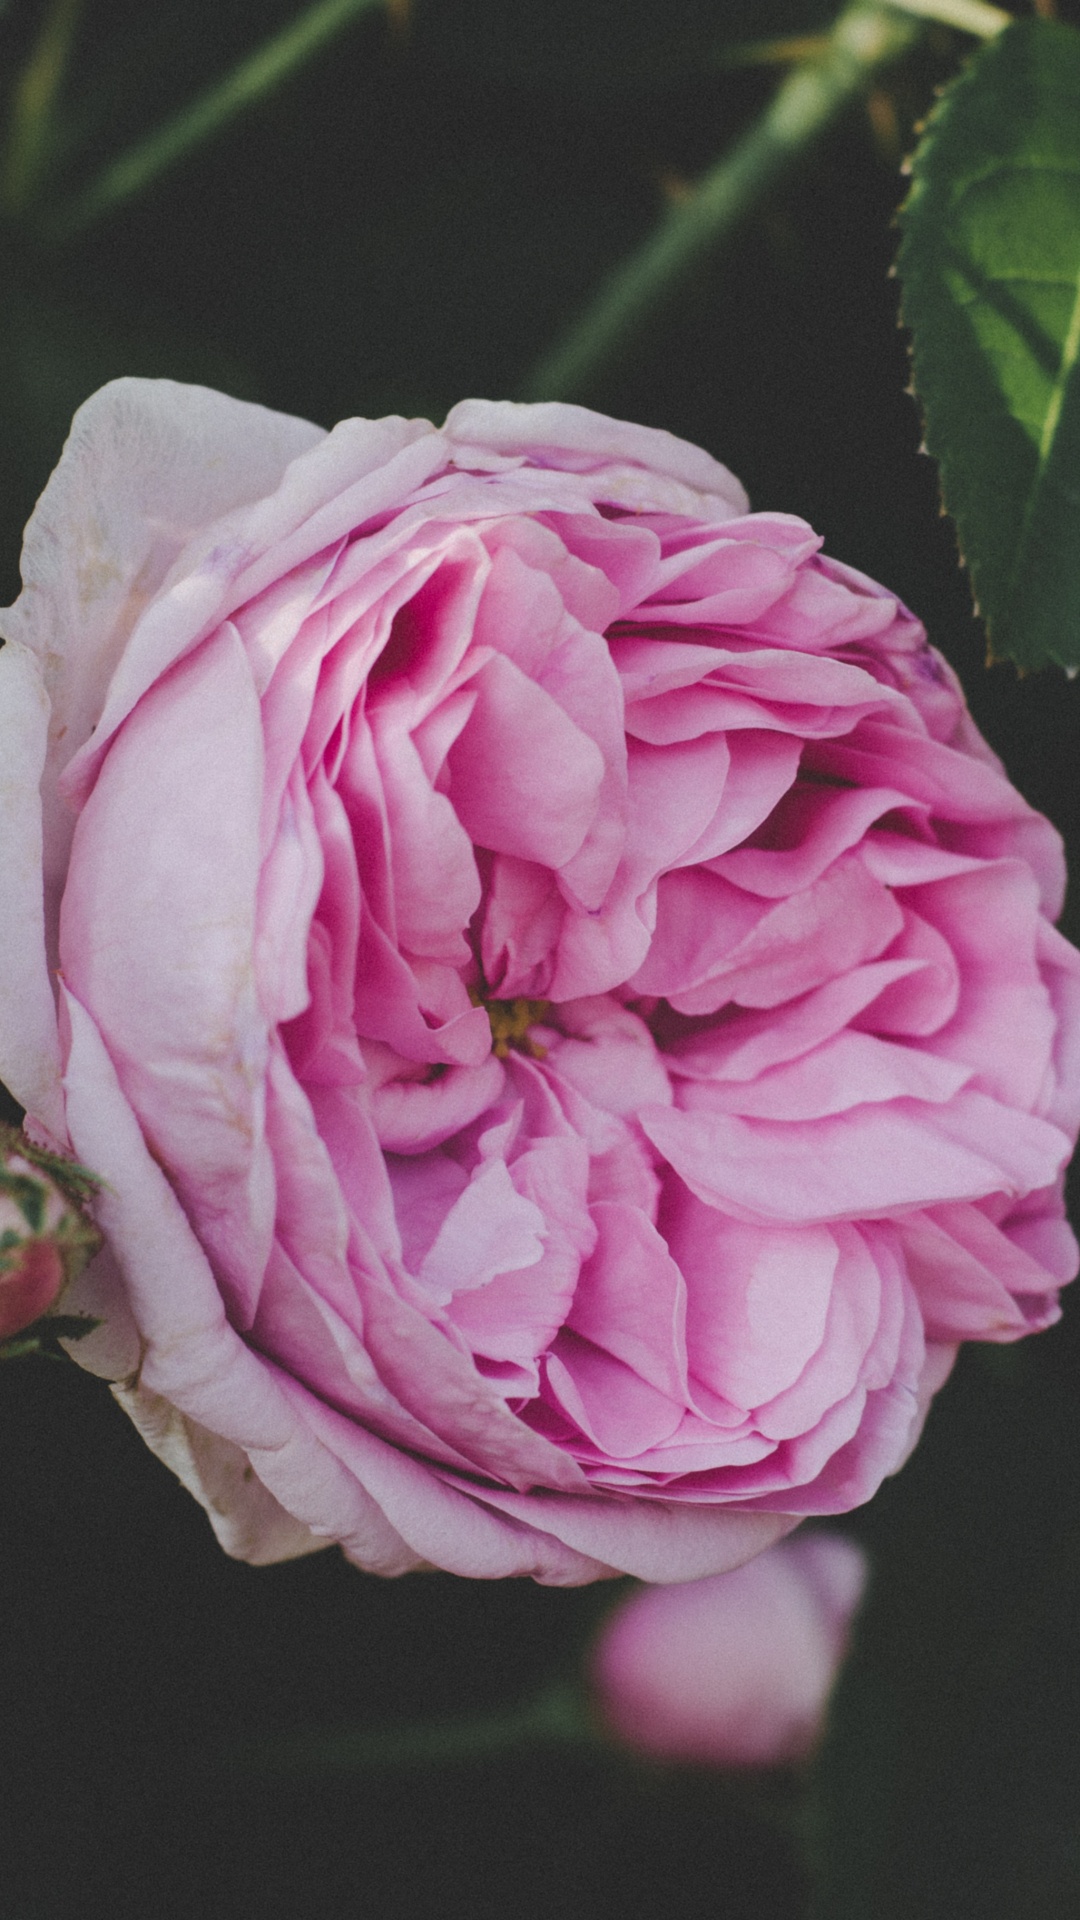 Rose Rose en Fleurs Pendant la Journée. Wallpaper in 1080x1920 Resolution